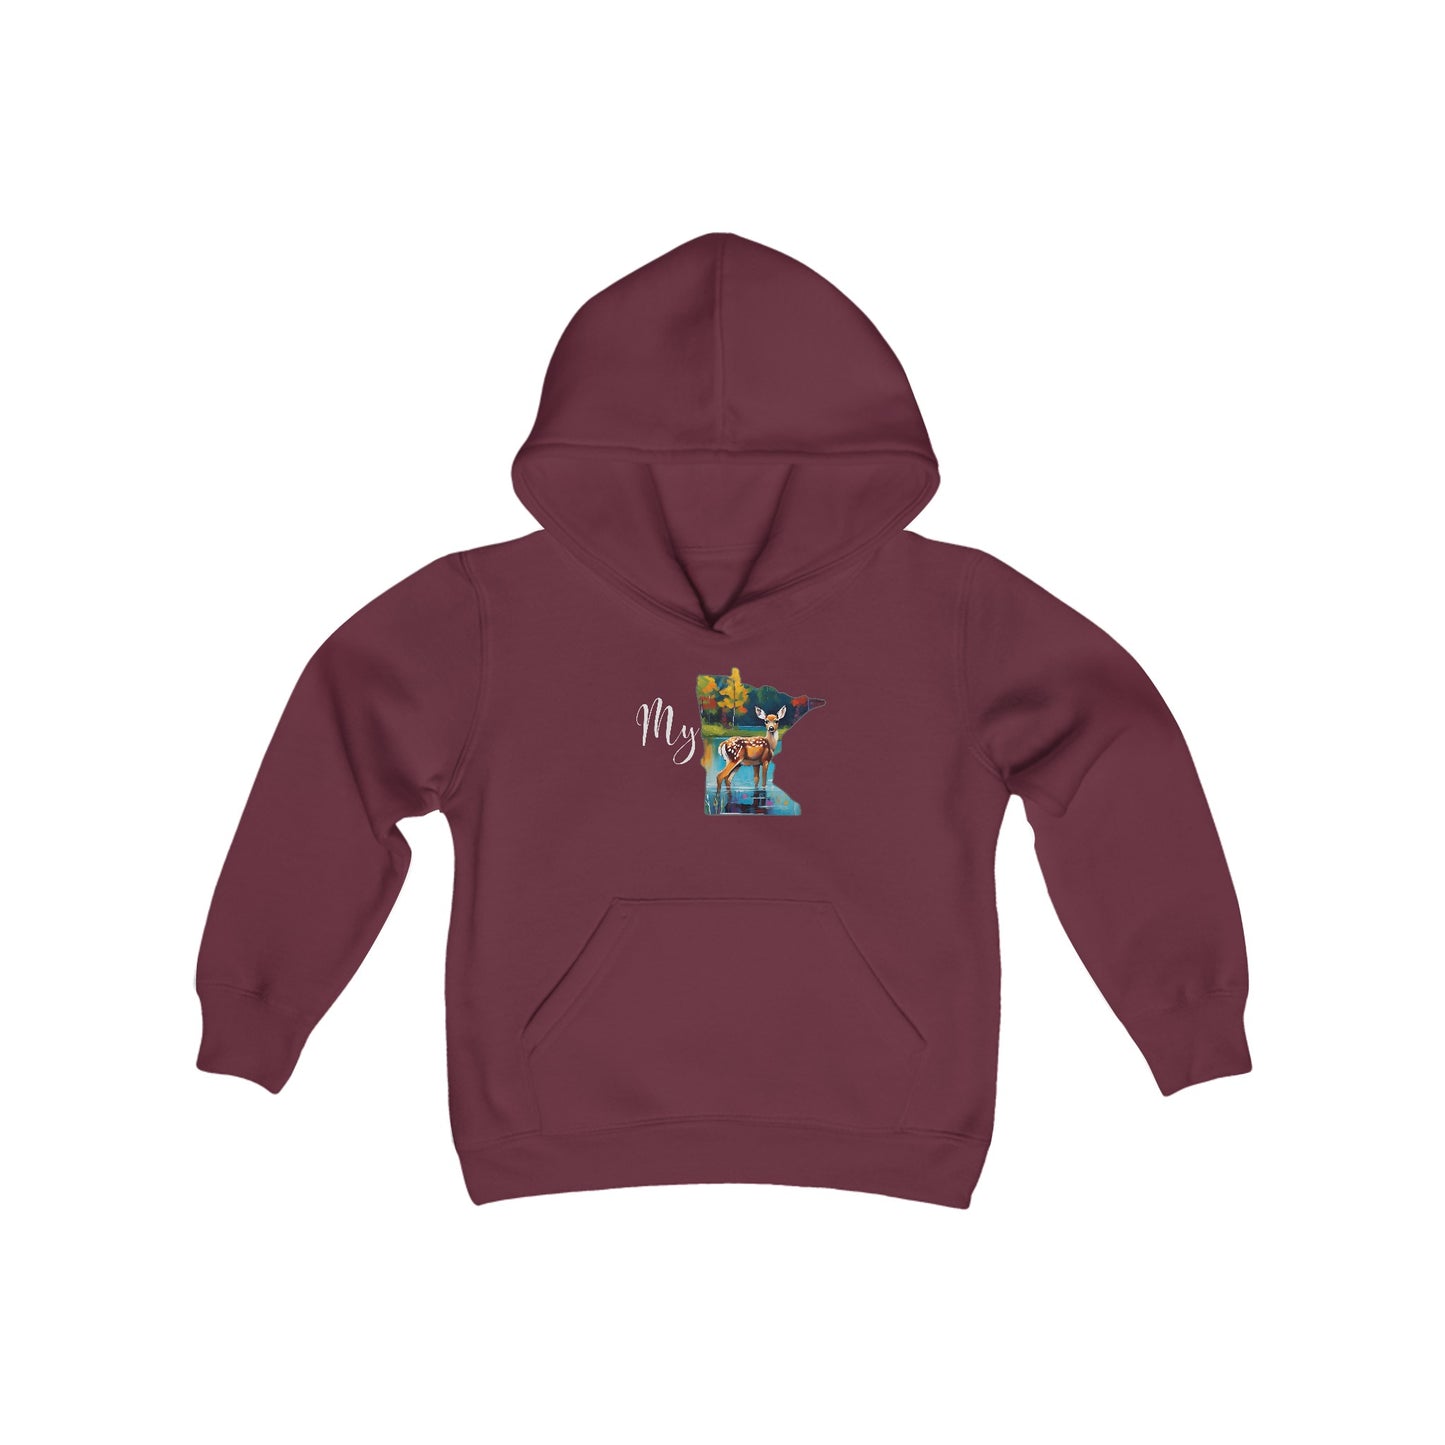 Youth Heavy Blend Hooded Sweatshirt - My MN Deer - Customizable Logo